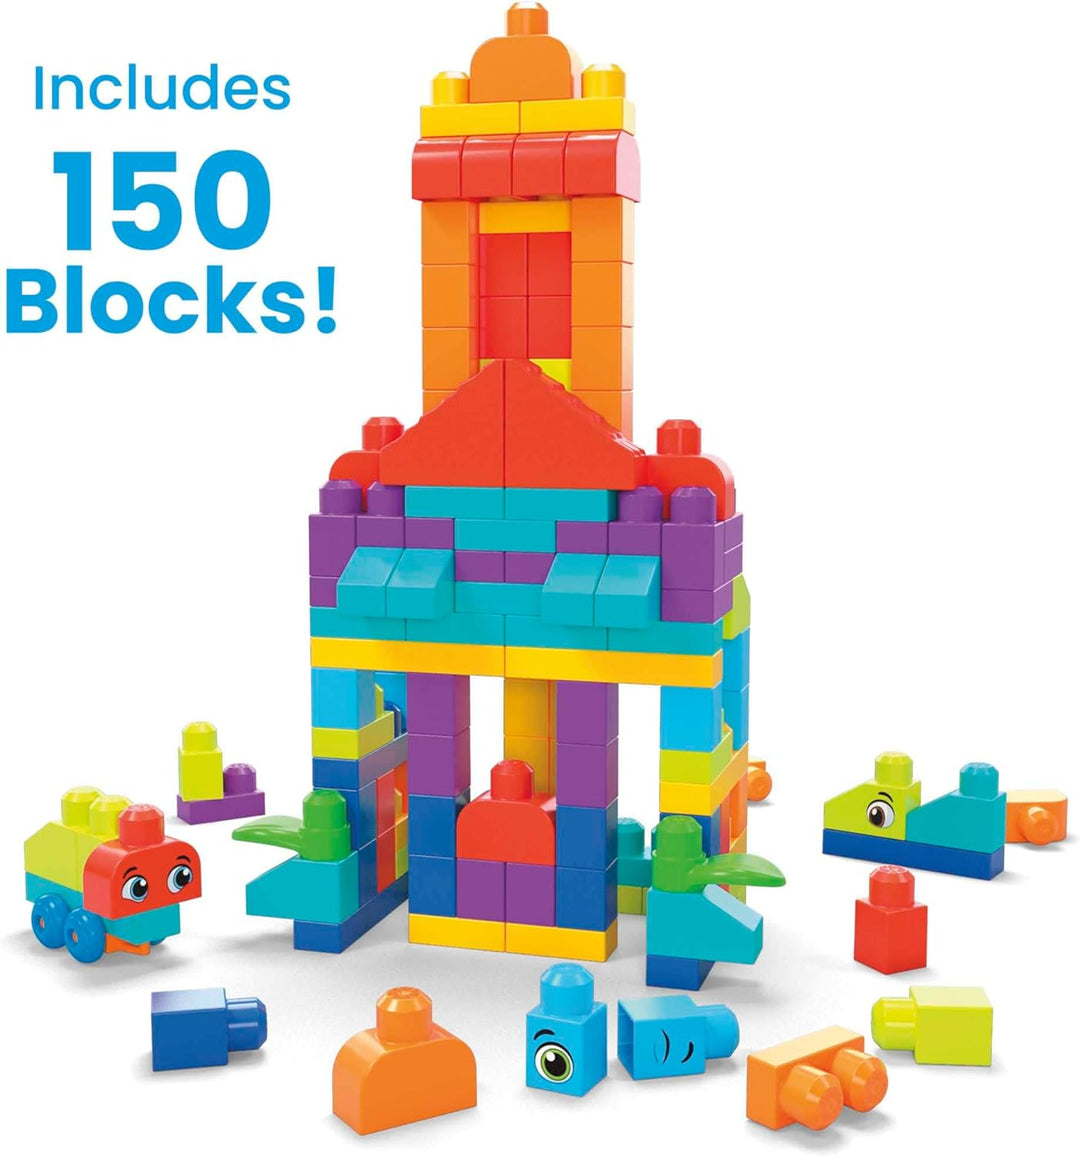 ?MEGA BLOKS Bigger Building Bag building set with 150 big and colorful building blocks, and 1 storage bag